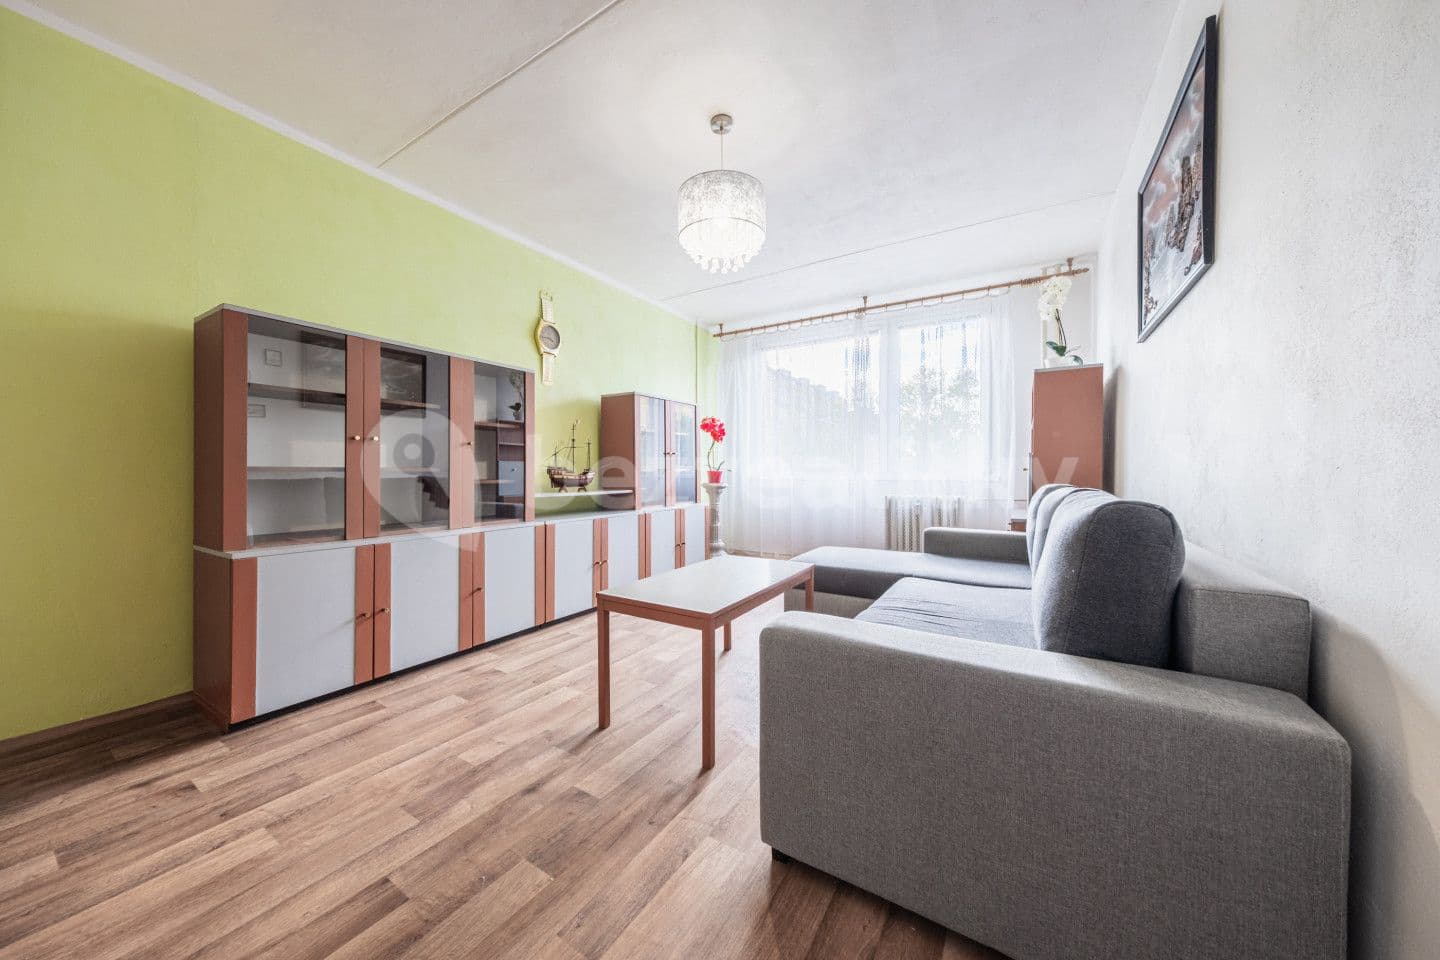 2 bedroom with open-plan kitchen flat for sale, 78 m², Bazovského, Prague, Prague